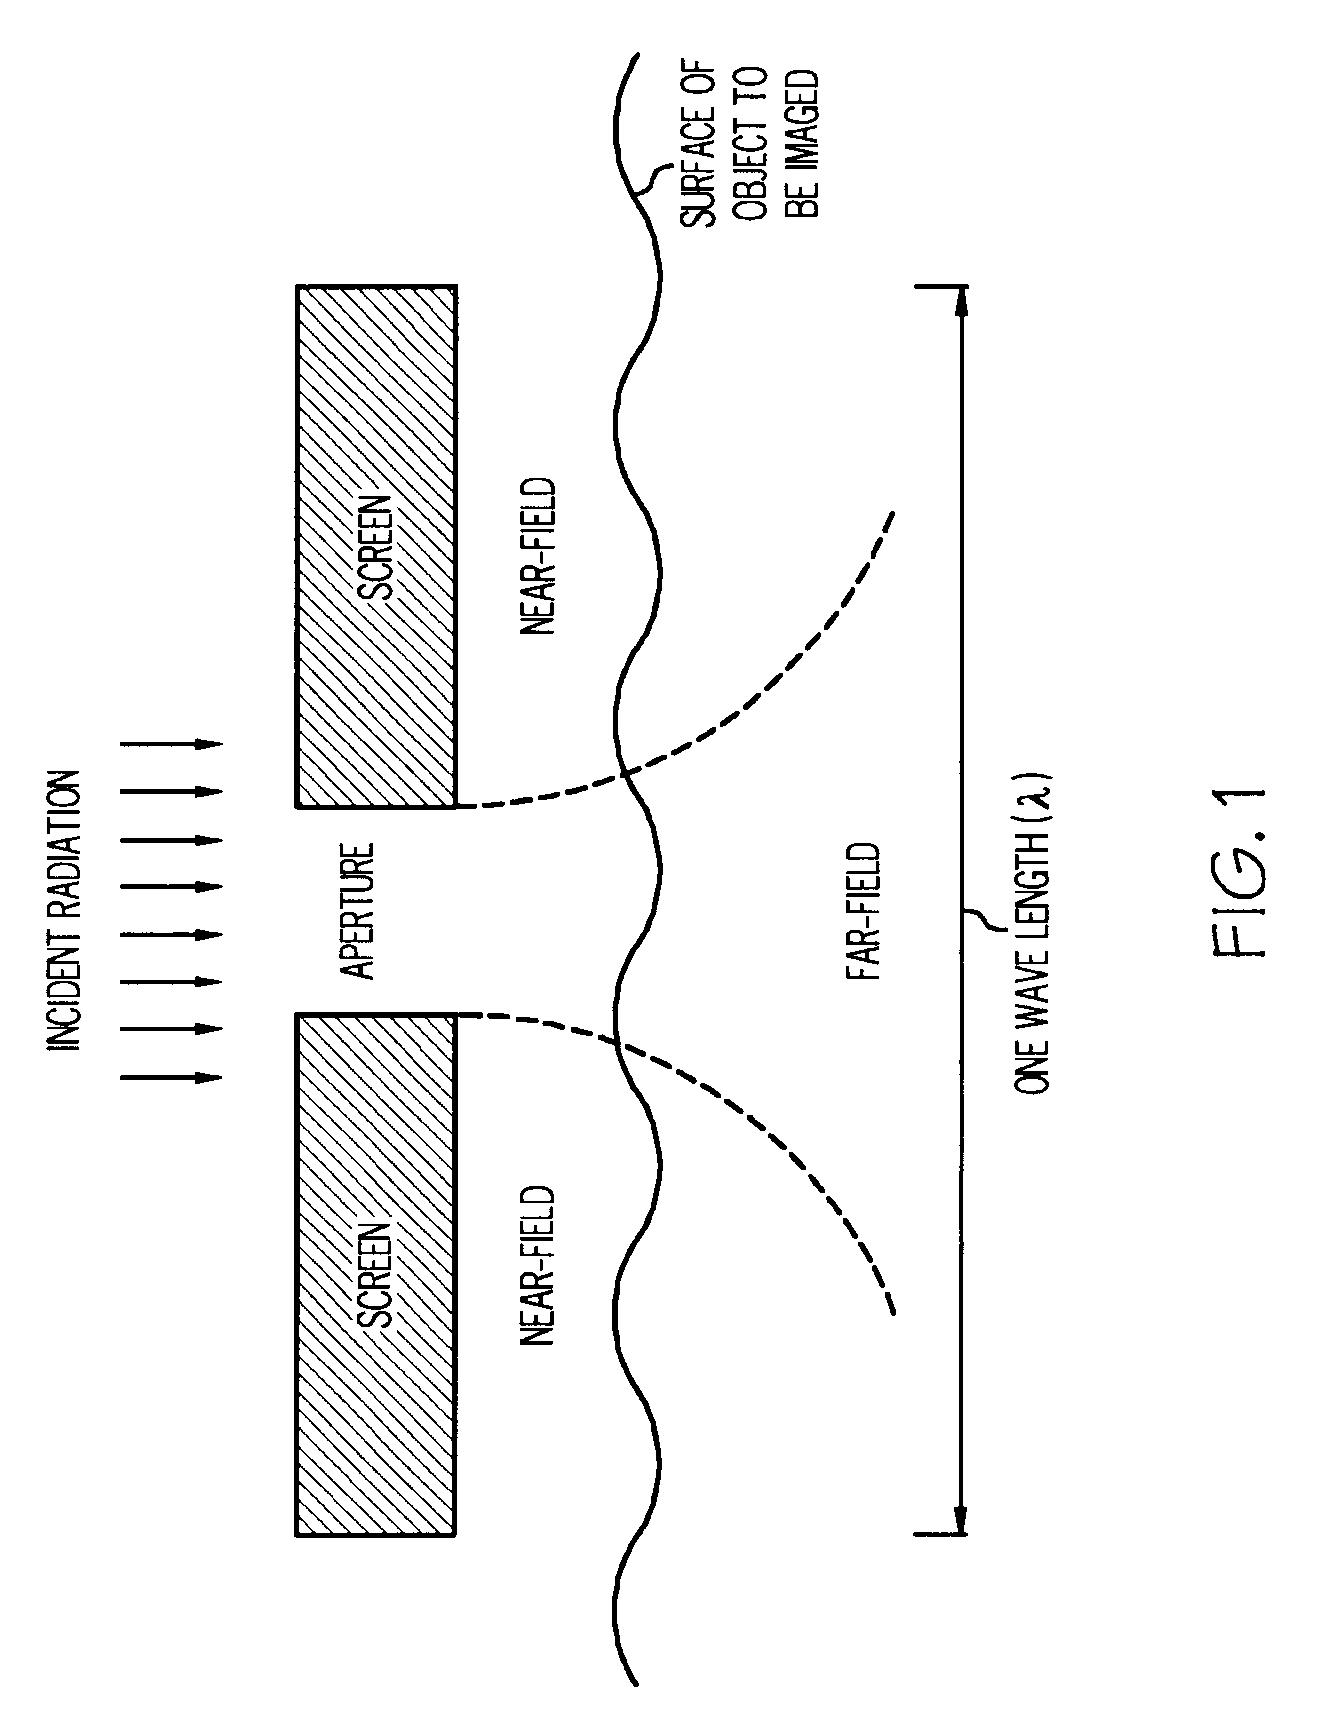 Resolution antenna array using metamaterials